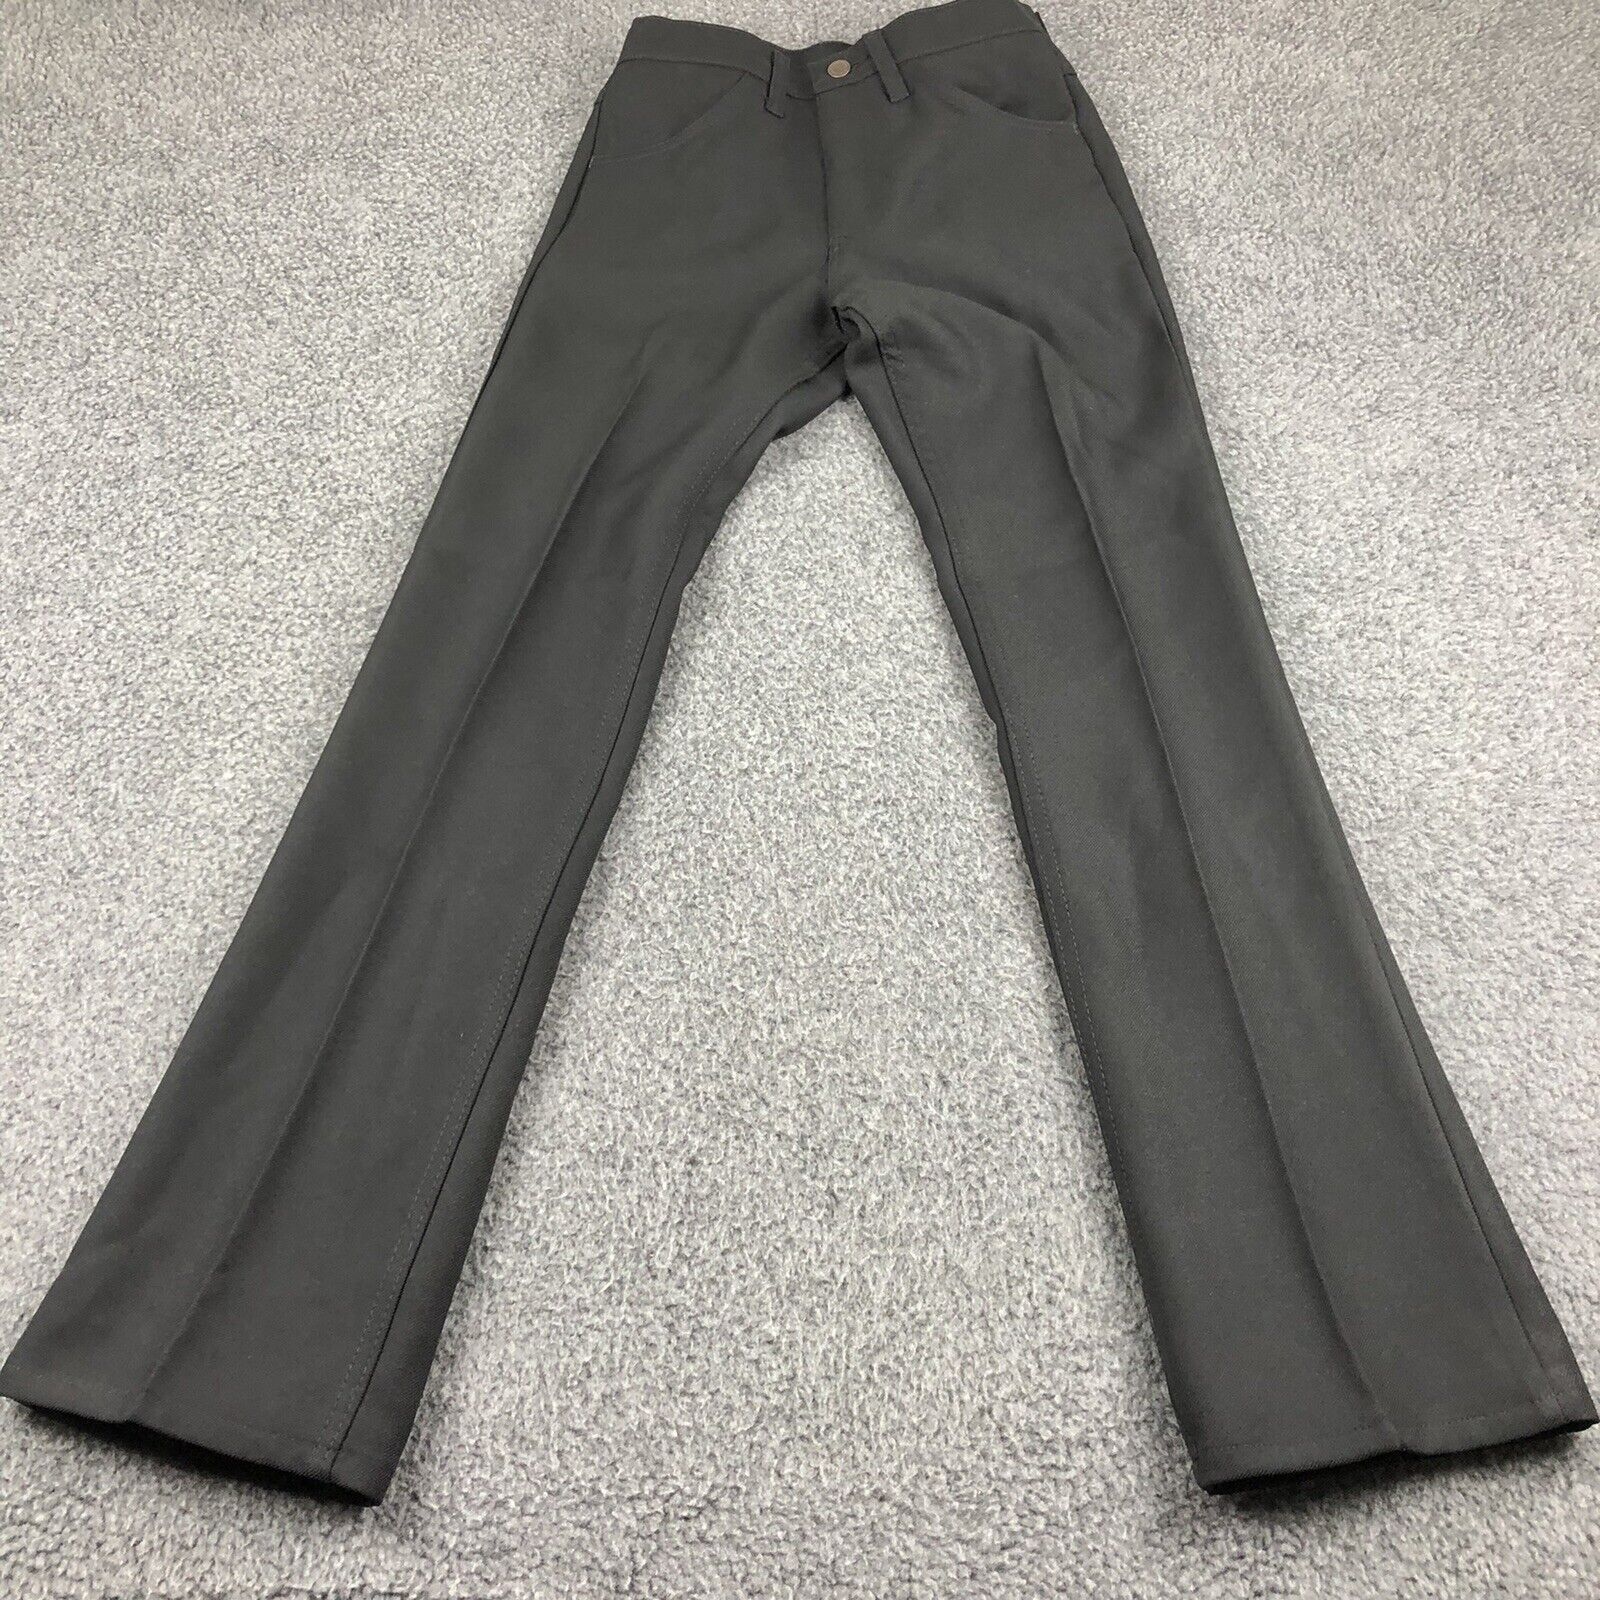 Wrangler USA Mens Black Wrancher Polyester Pants Dress Jeans 82BK 34 X 32  for sale online | eBay